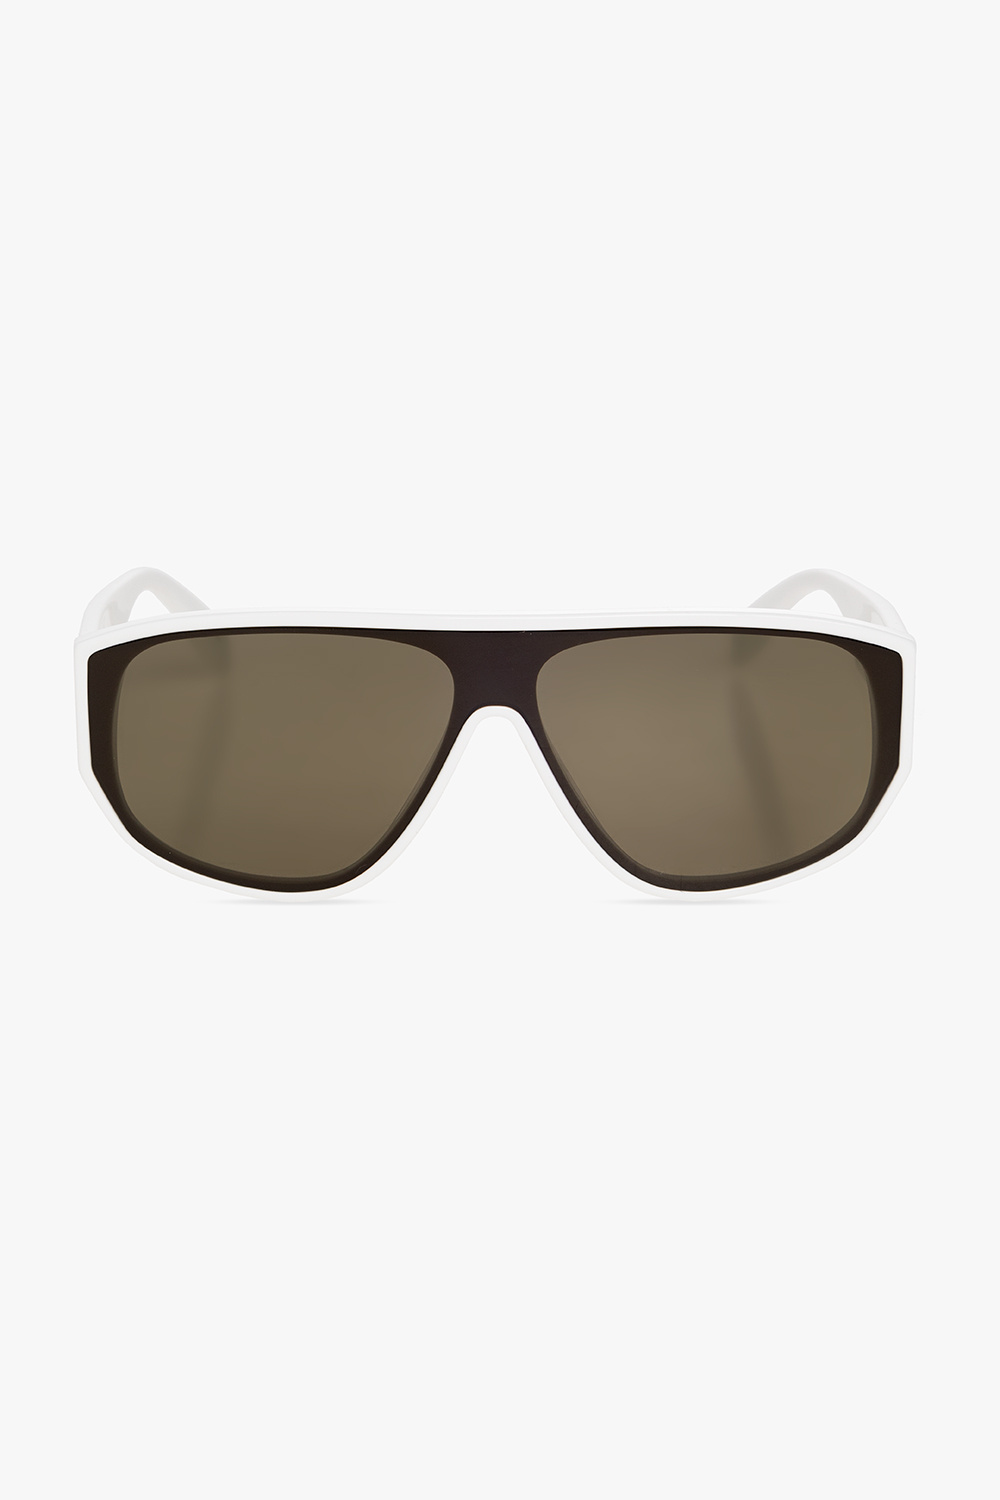 Alexander McQueen sunglasses GG0956S with logo